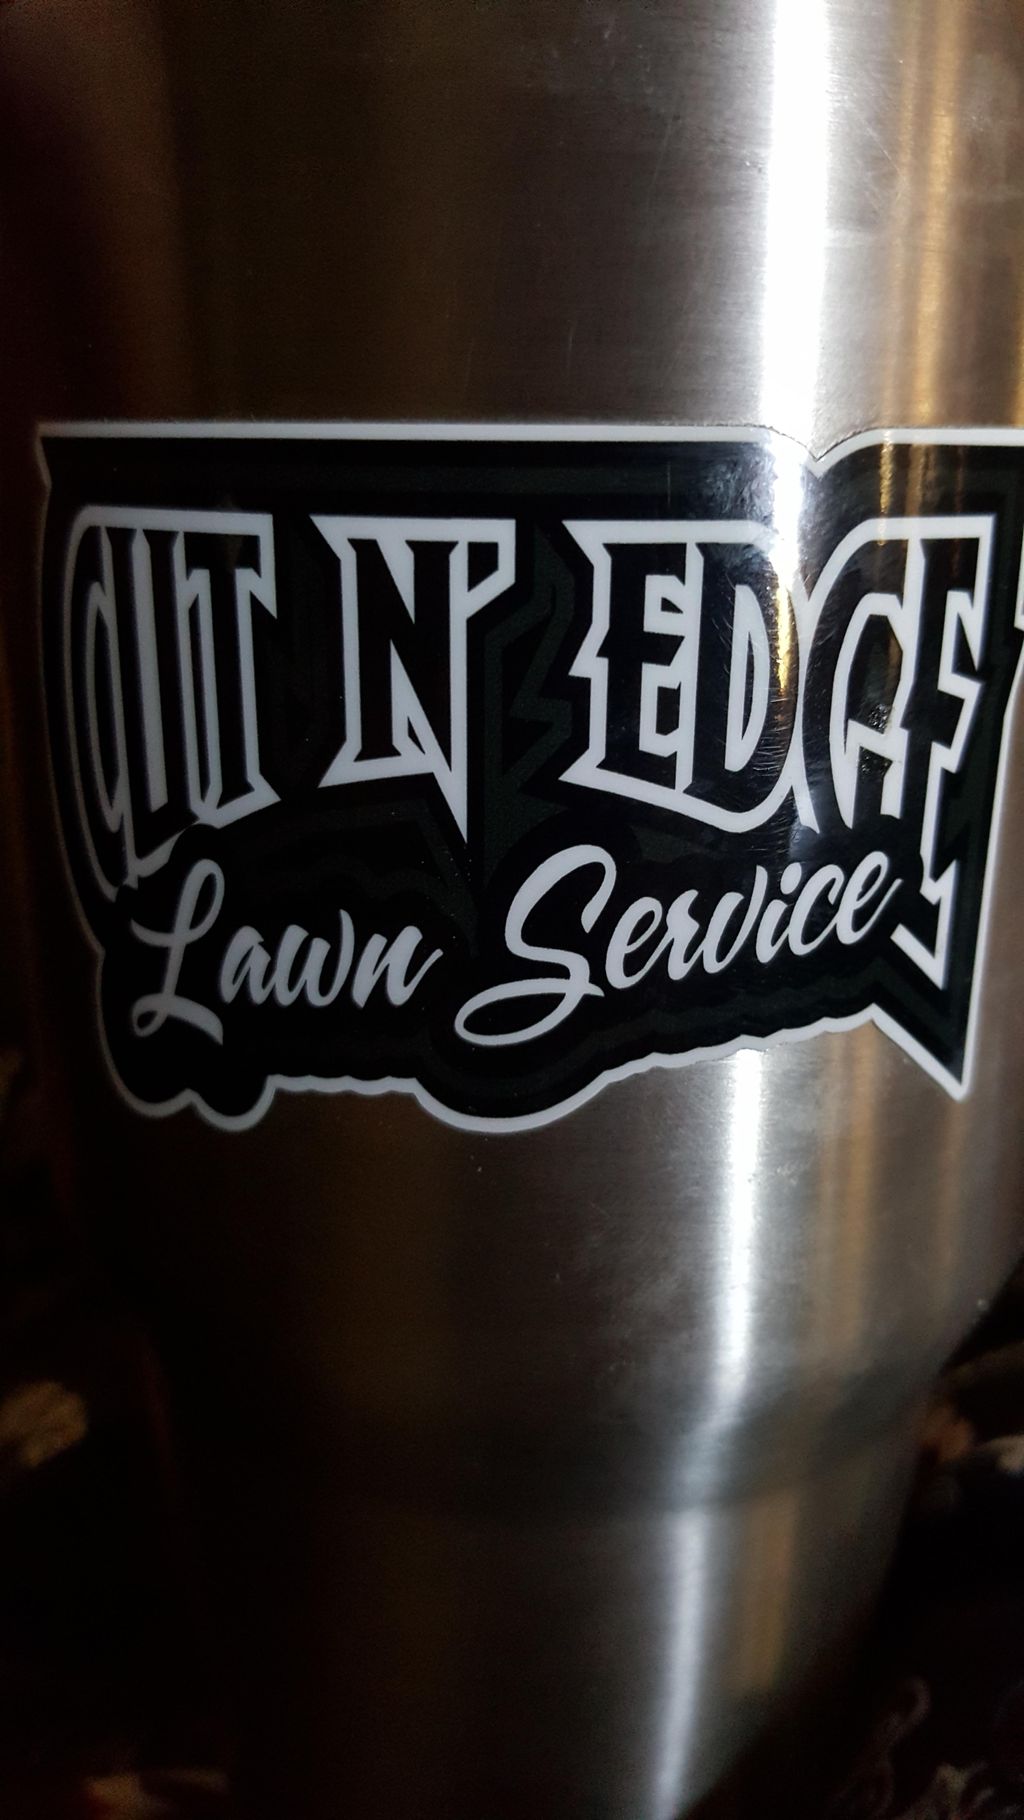 Cut 'N Edge Lawn Service, Brent Braden